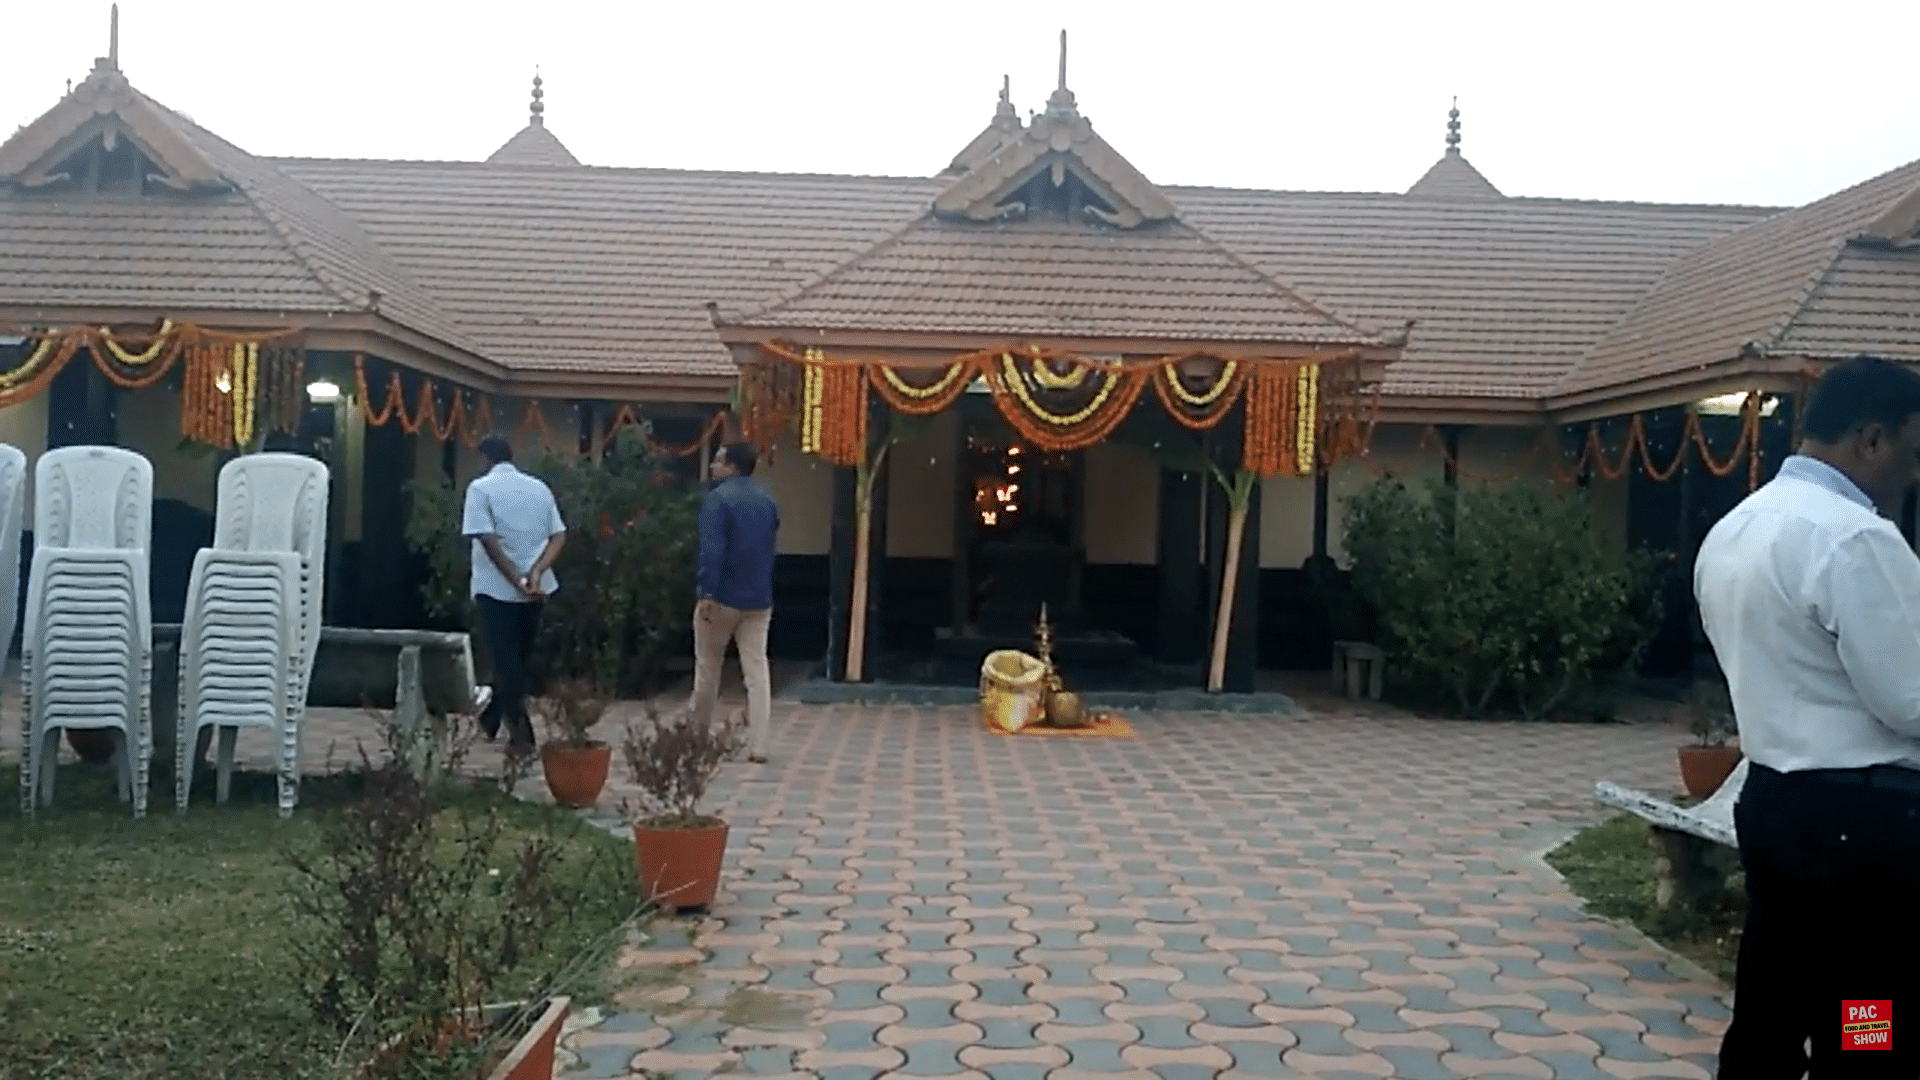 Hari Hara Dharmasastha Temple Overview